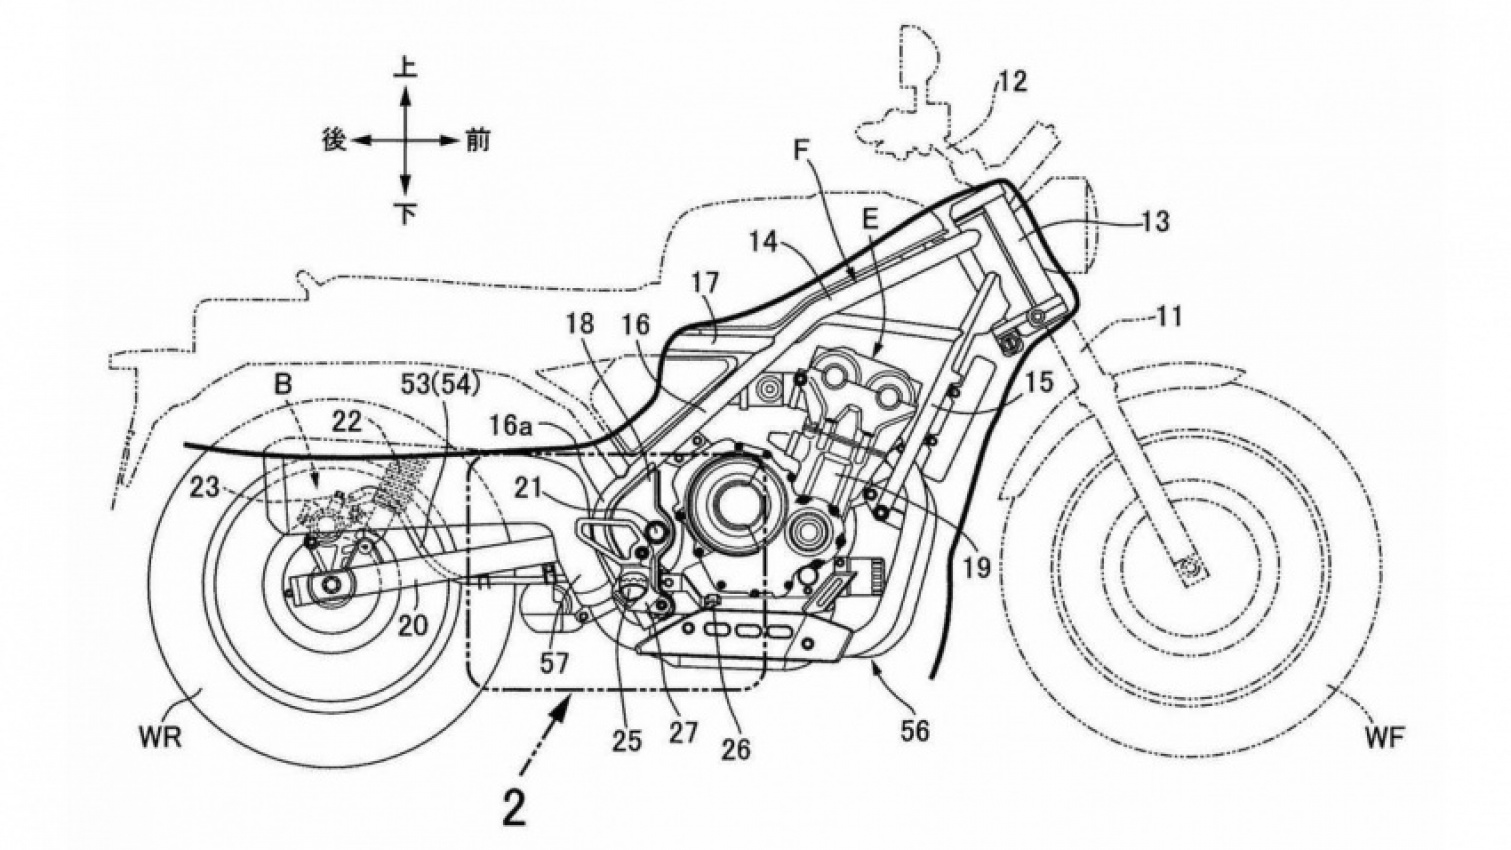 autos, cars, honda, ram, honda patents reveal details behind possible cl500 scrambler